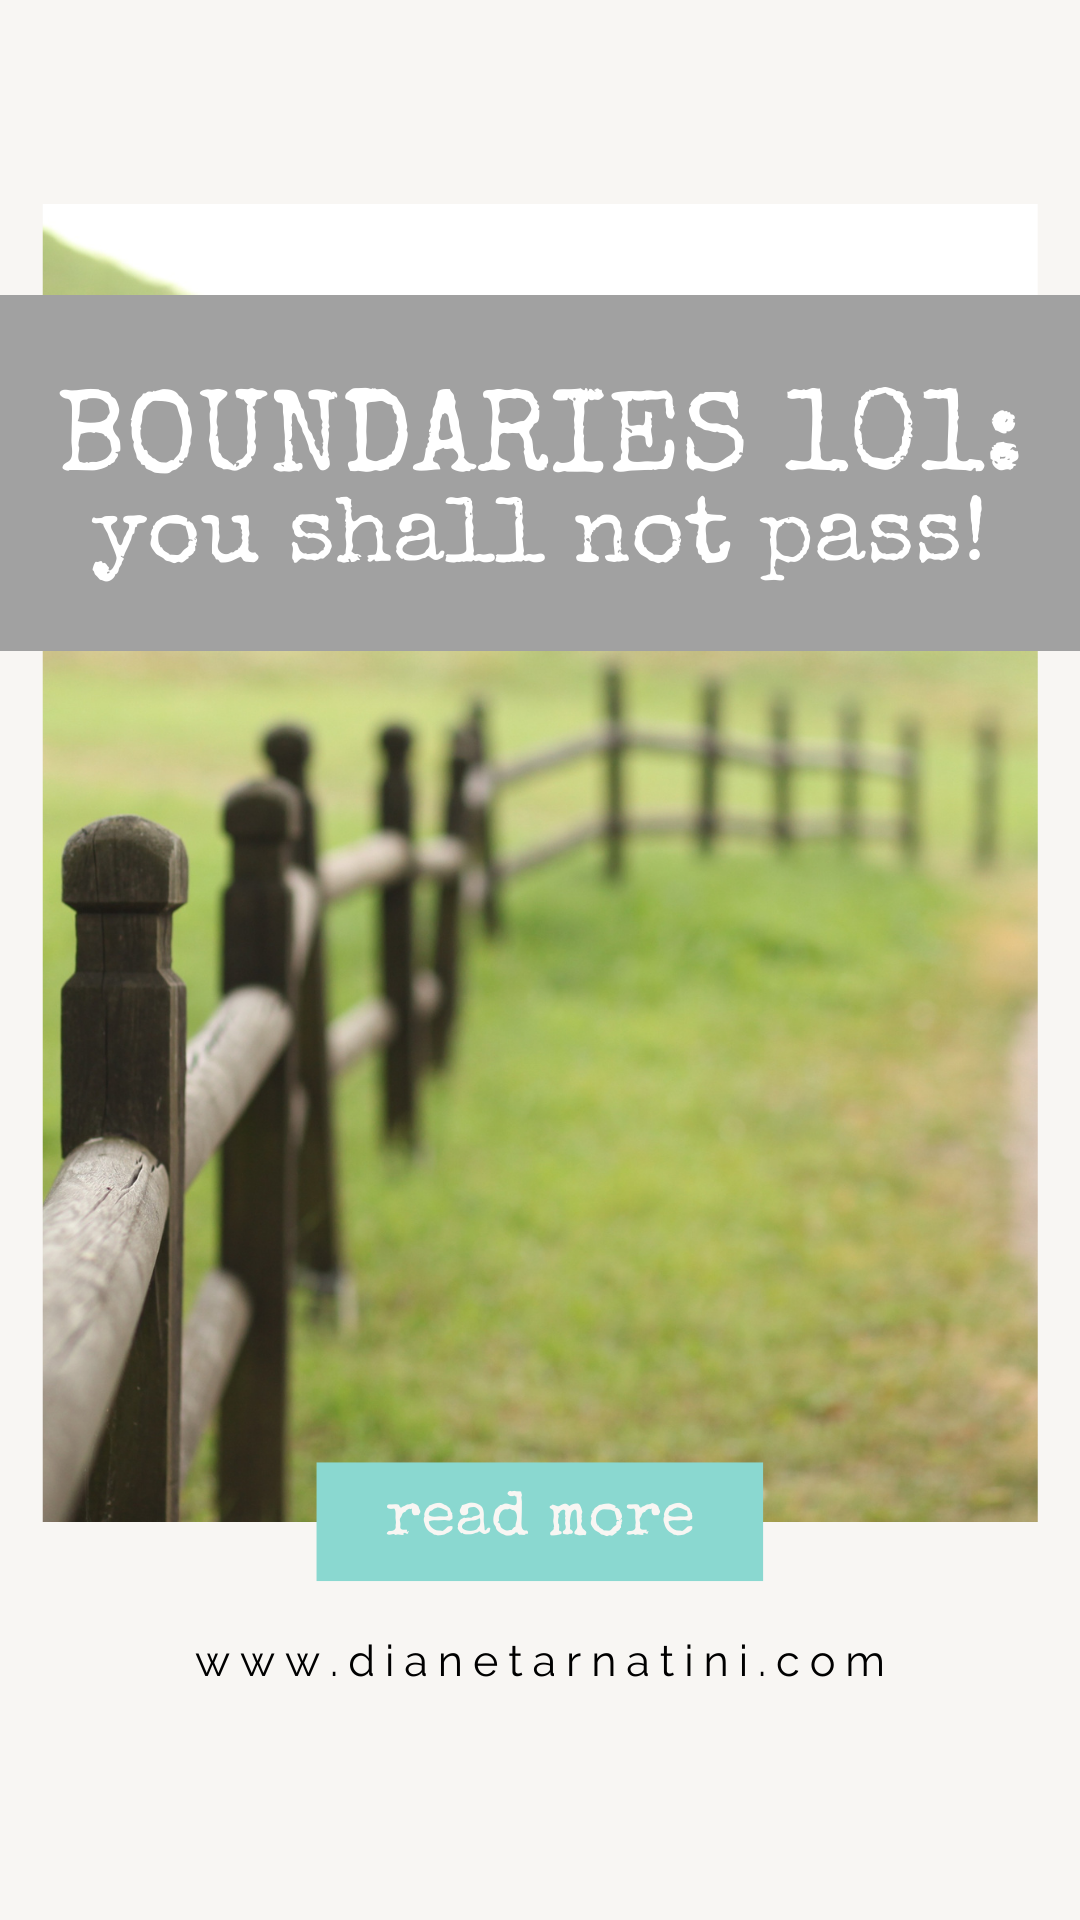 How to set Boundaries